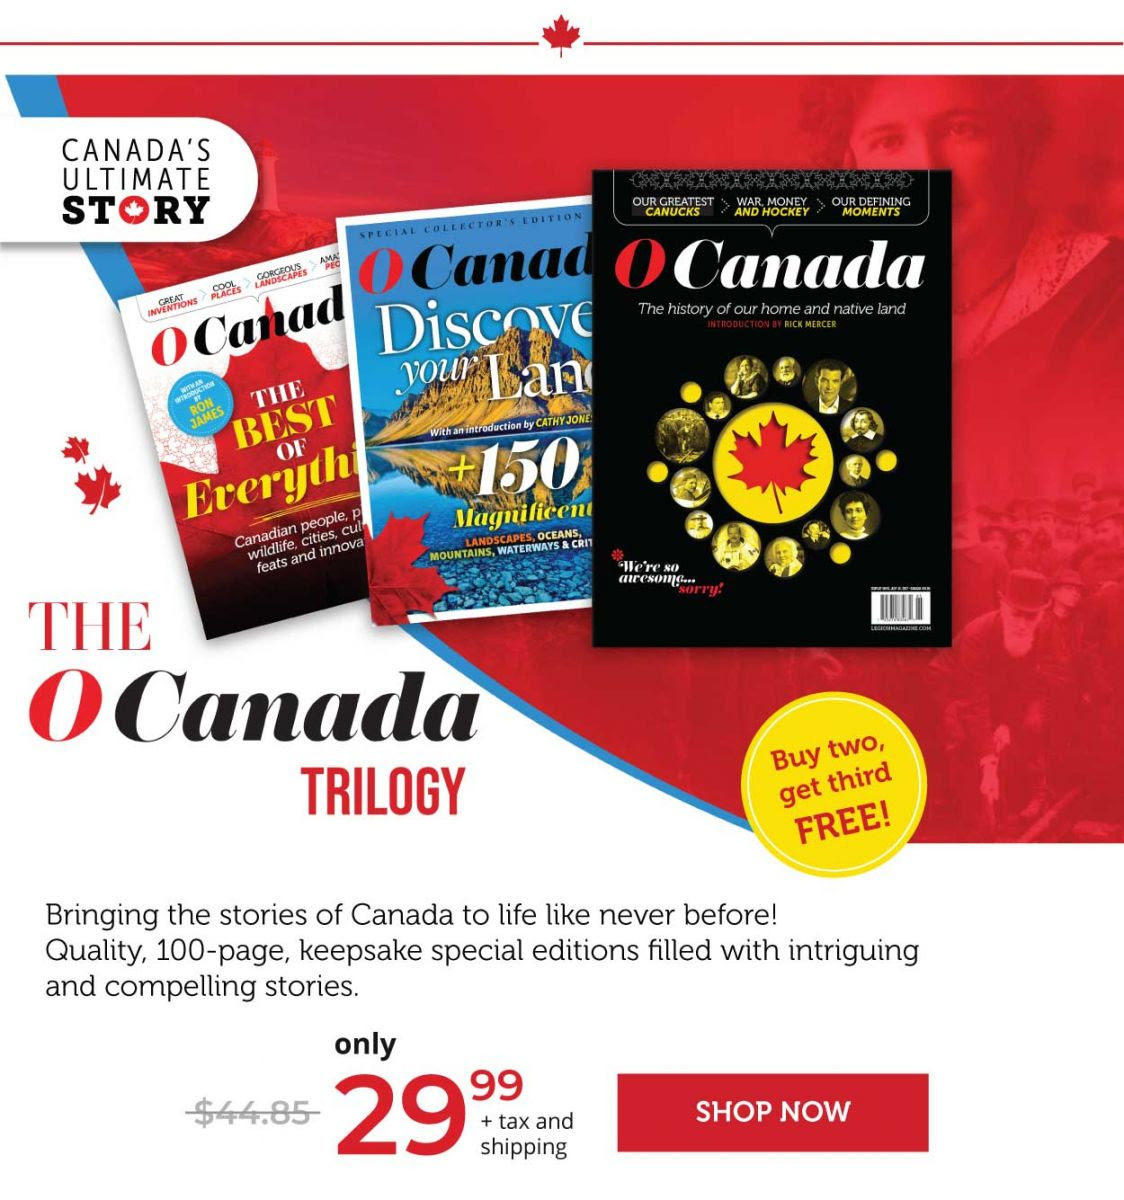 The O Canada Trilogy